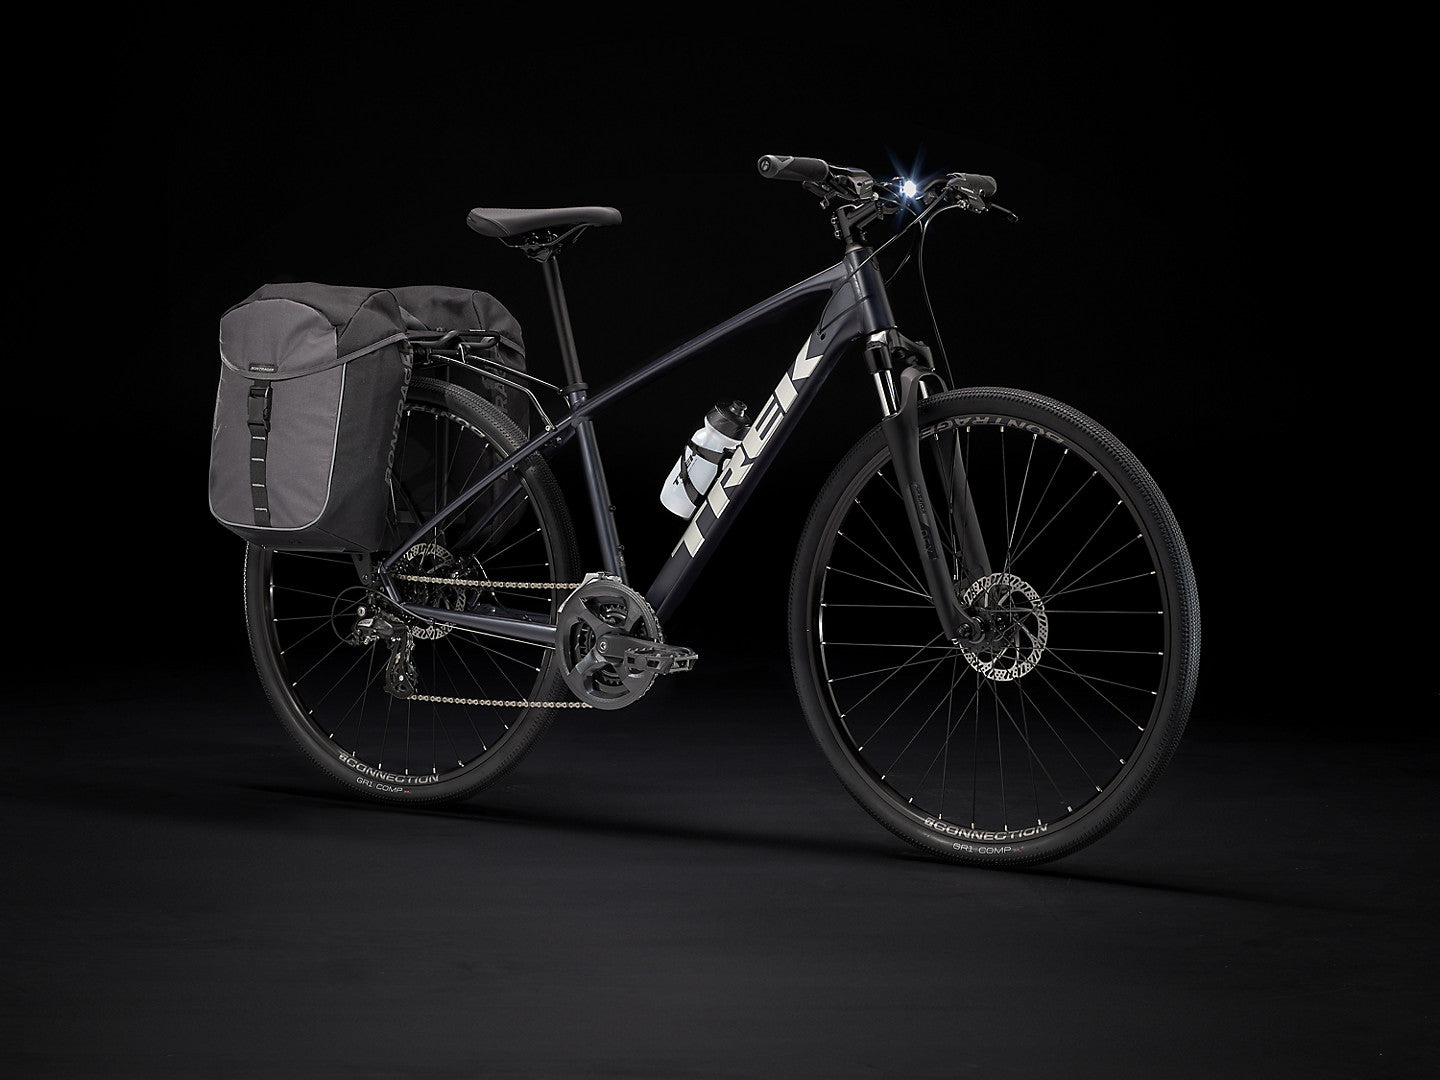 Trek Bikes- Hybrid Bikes- Fitness Bikes- Dual Sport 1